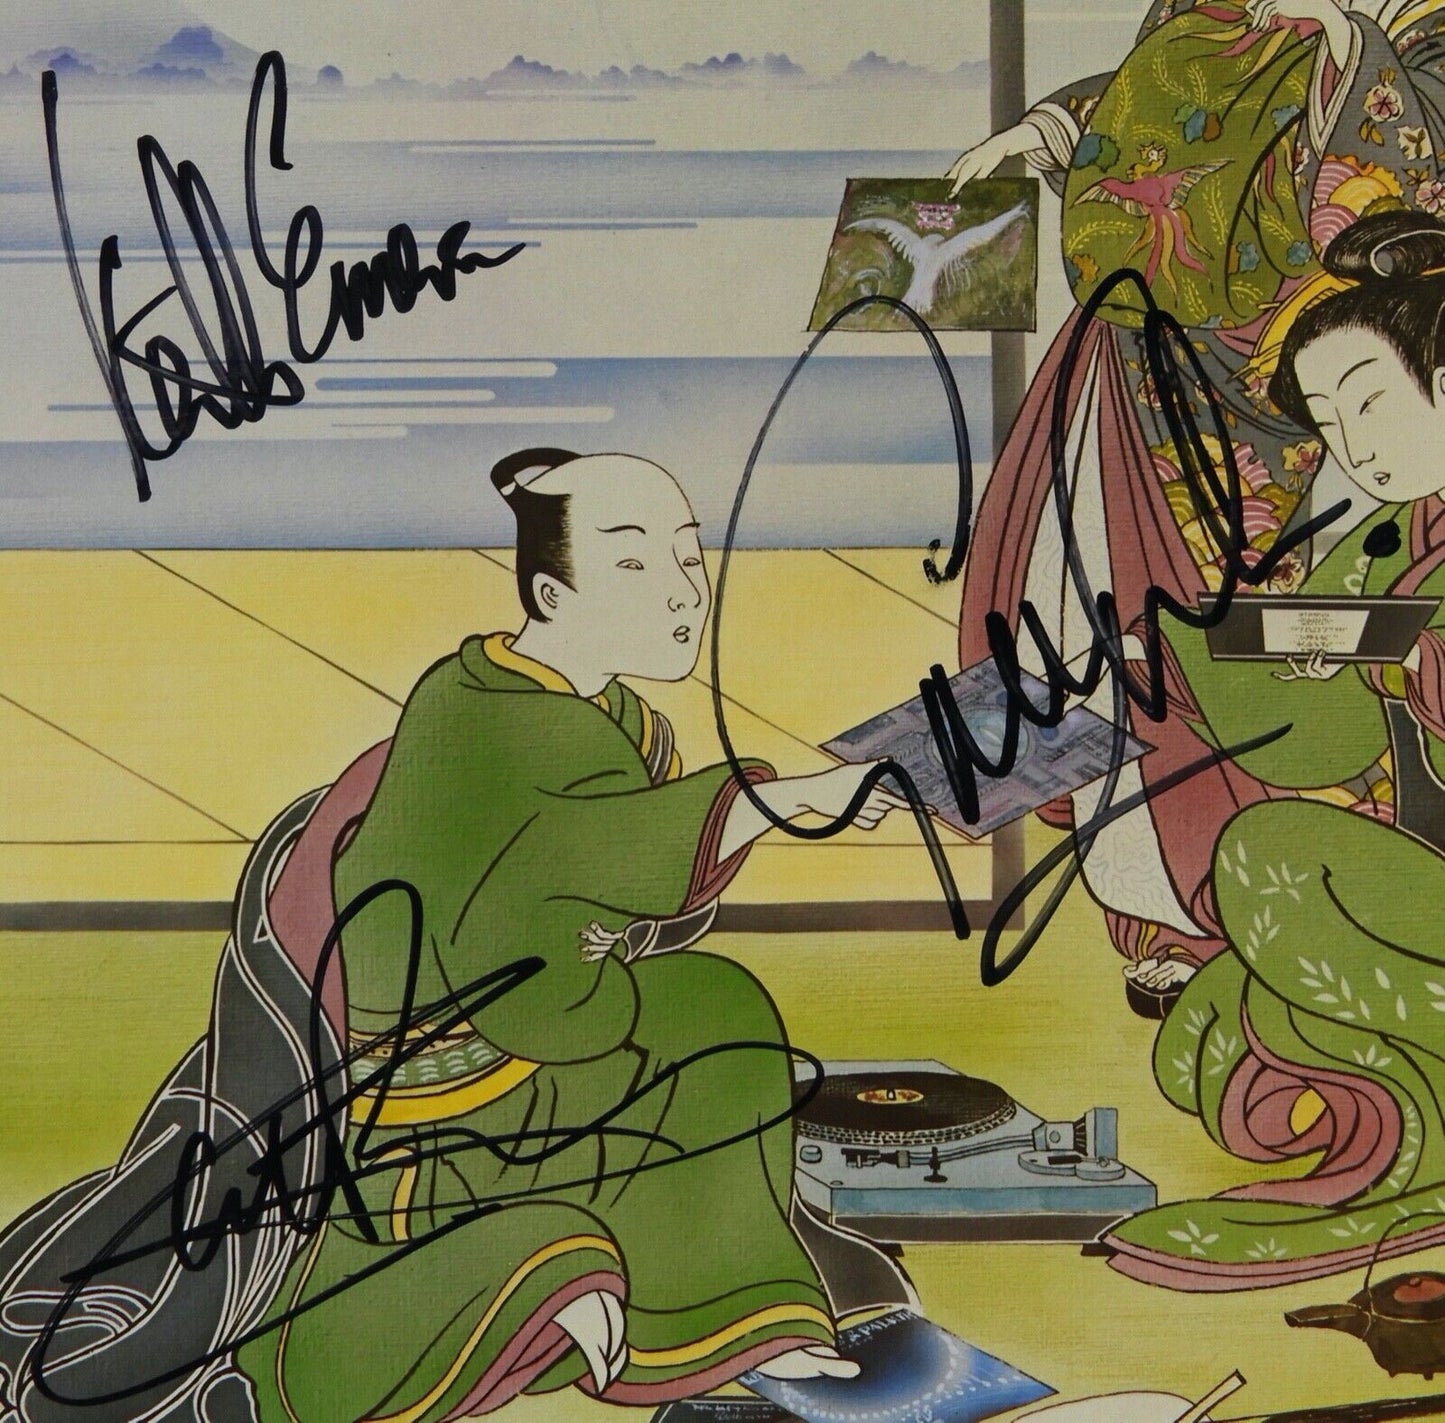 Emerson Lake & Palmer JSA Signed Autograph Album Record Vinyl Best Of